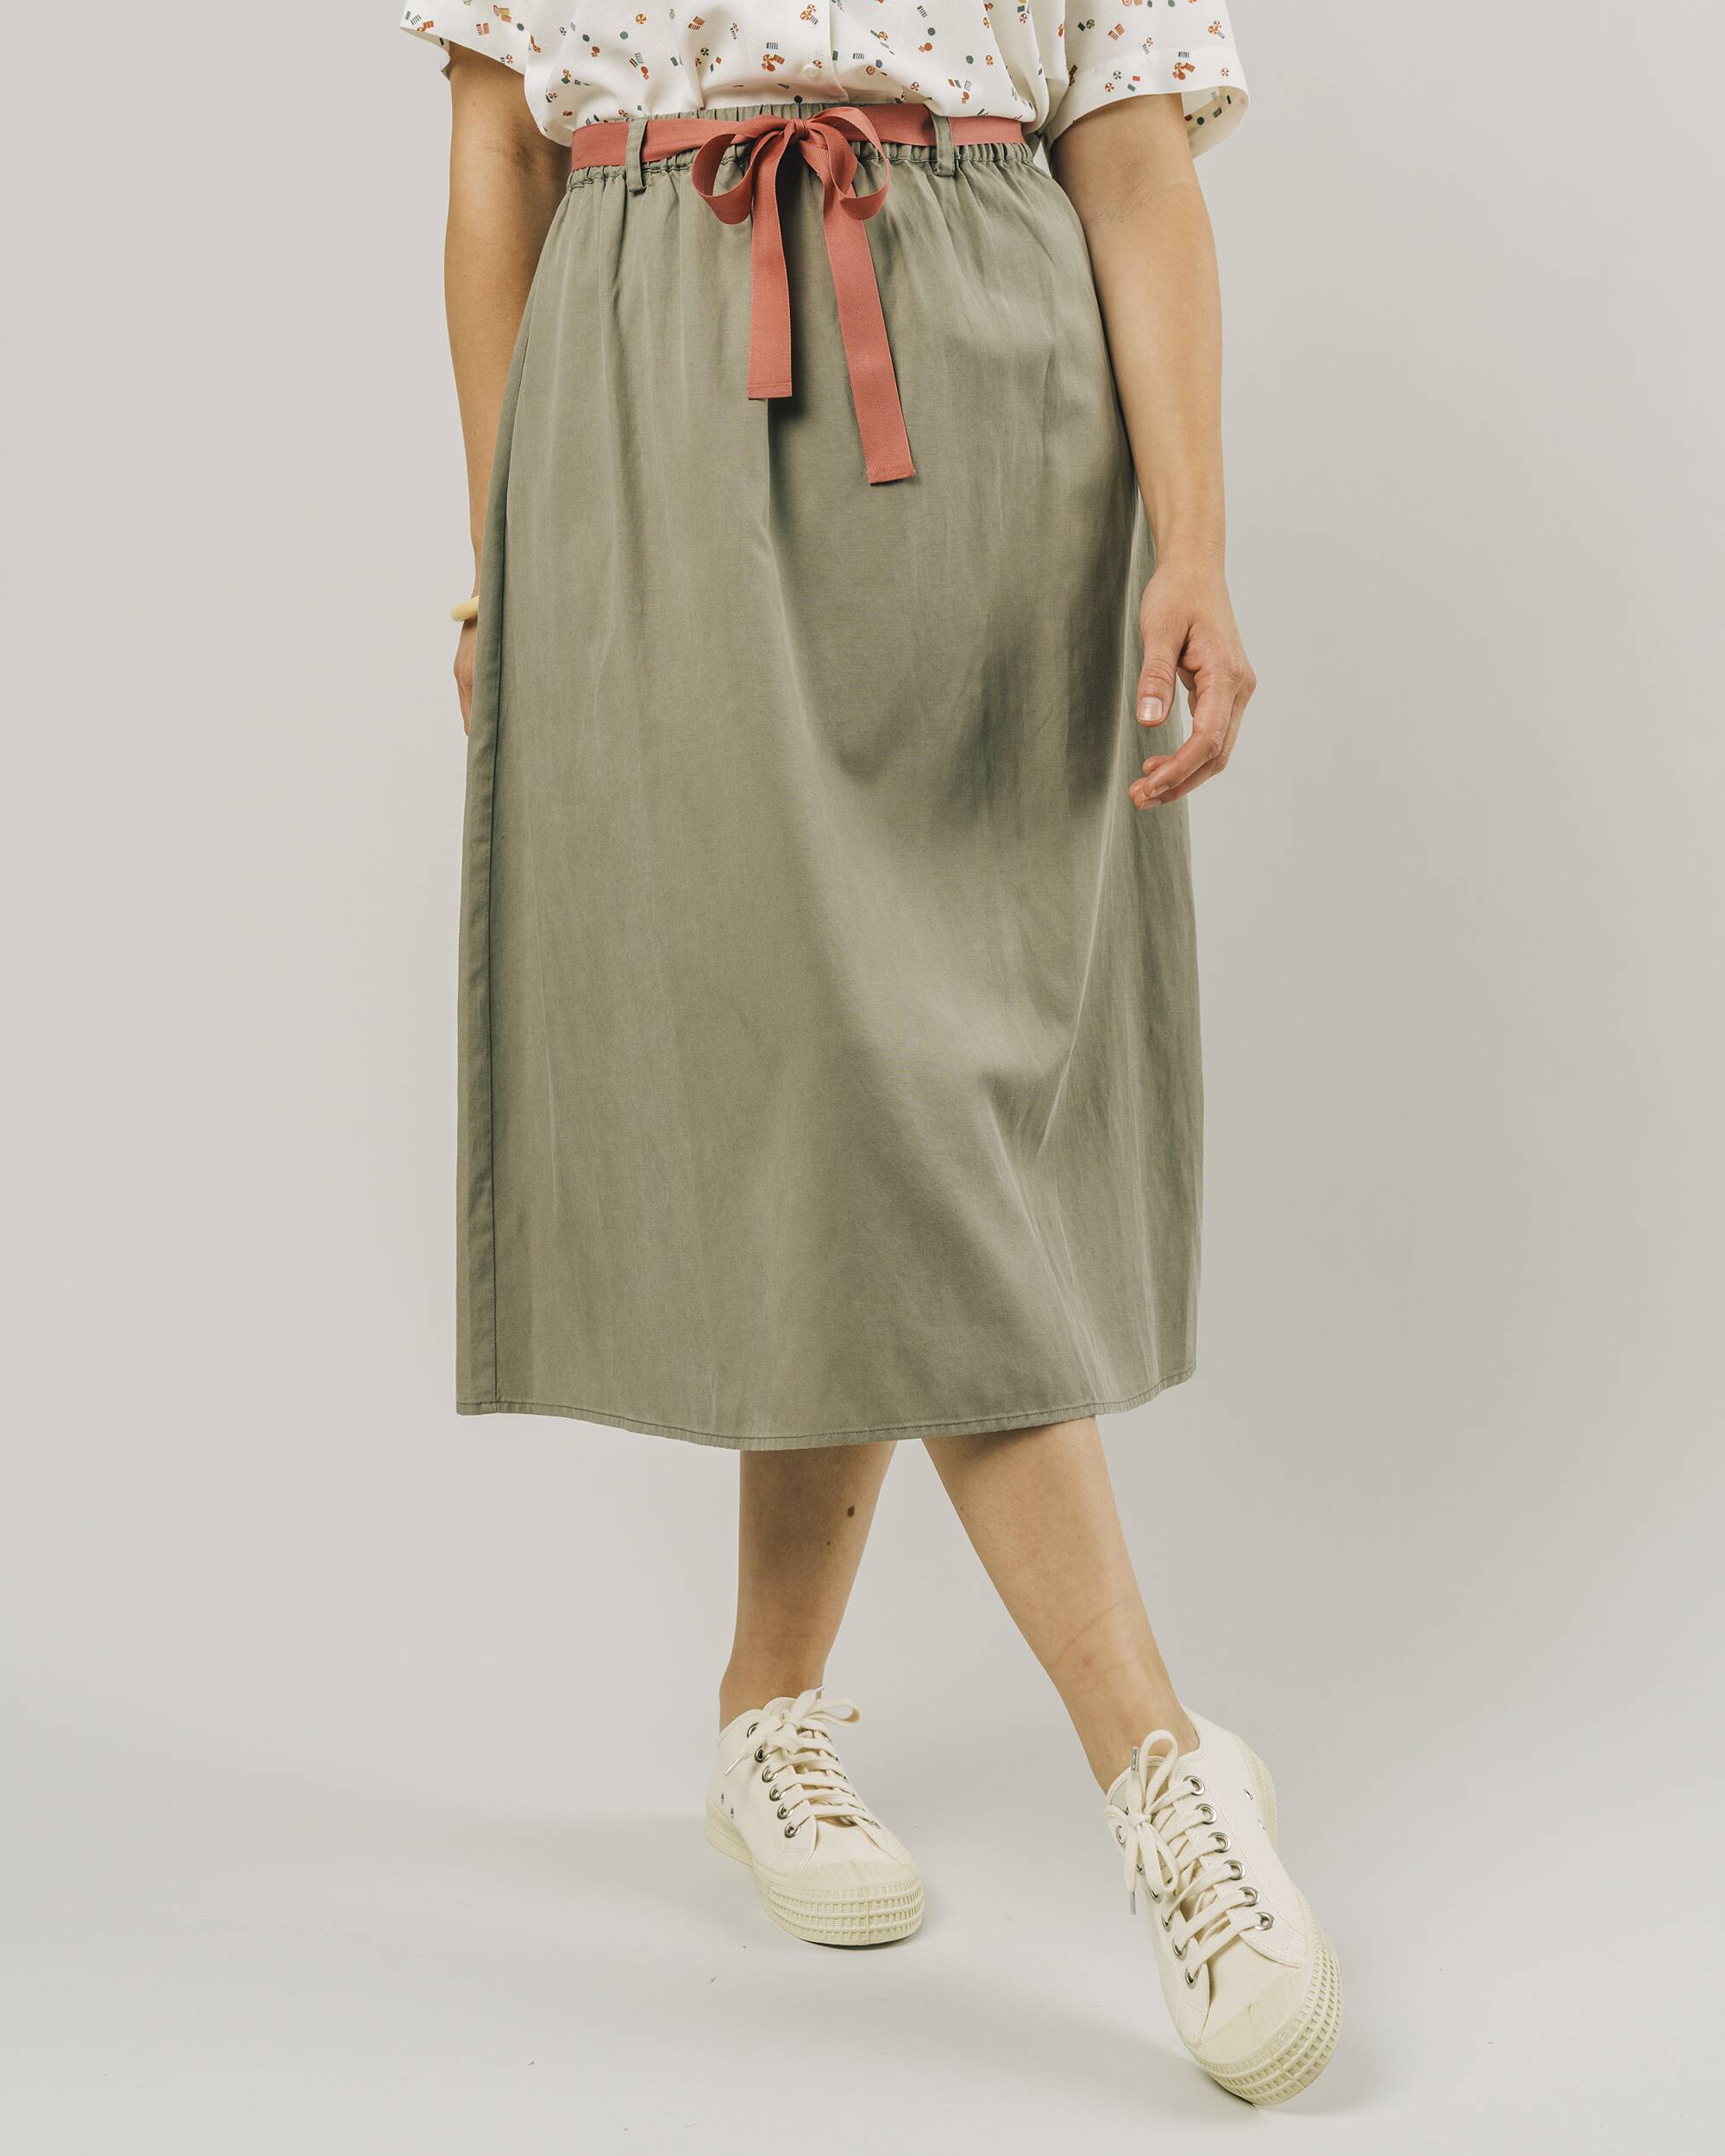 Green Elba skirt made of Tencel, organic cotton and Euro flax linen from Brava Fabrics